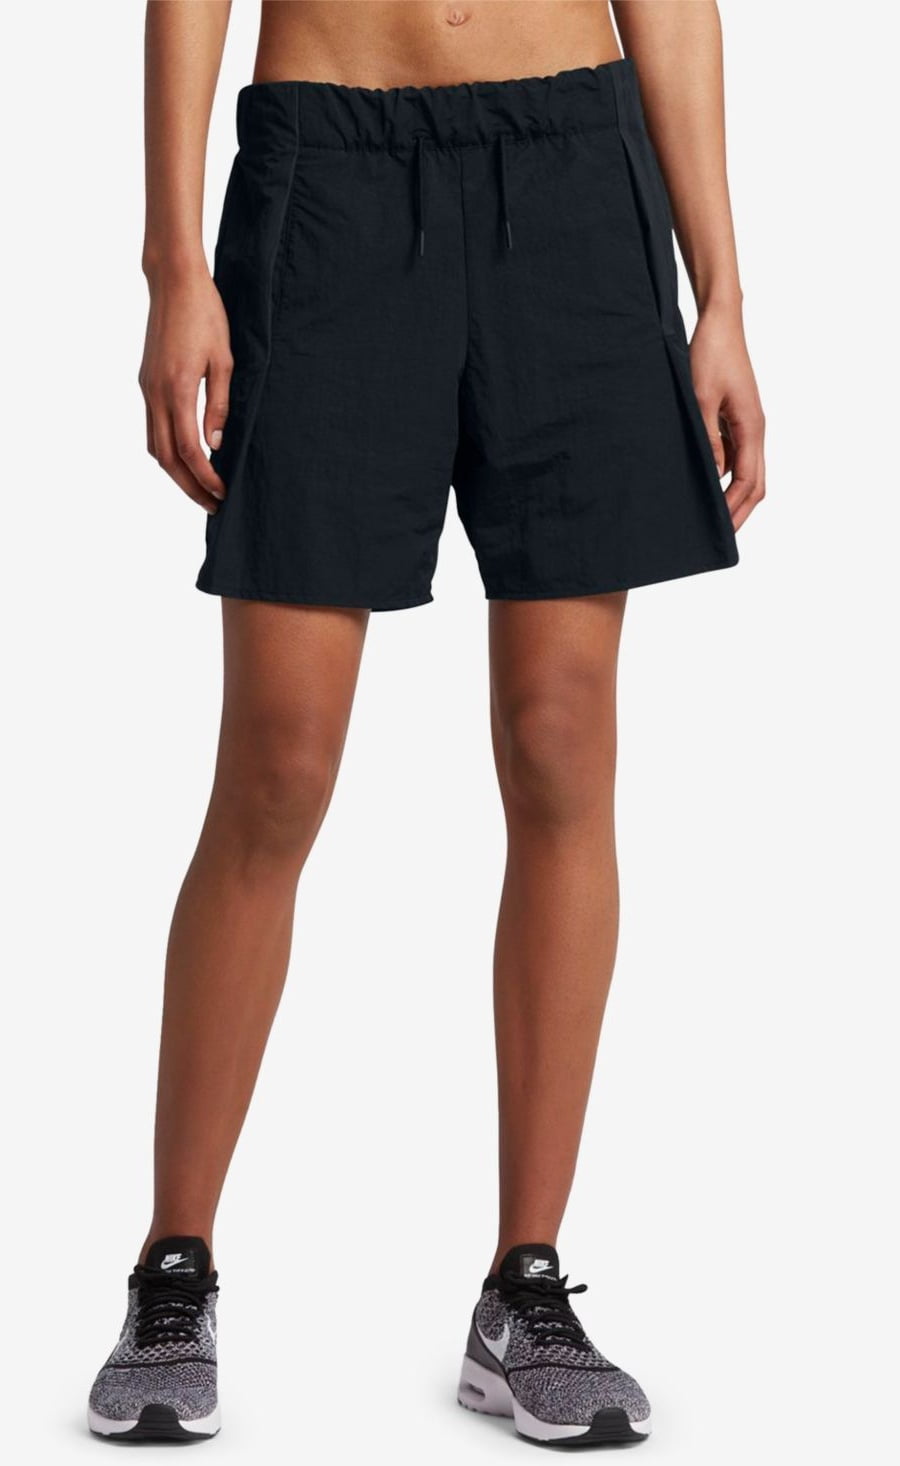 Nike Sportswear Bonded Woven Shorts,Black,X-Small Walmart.com